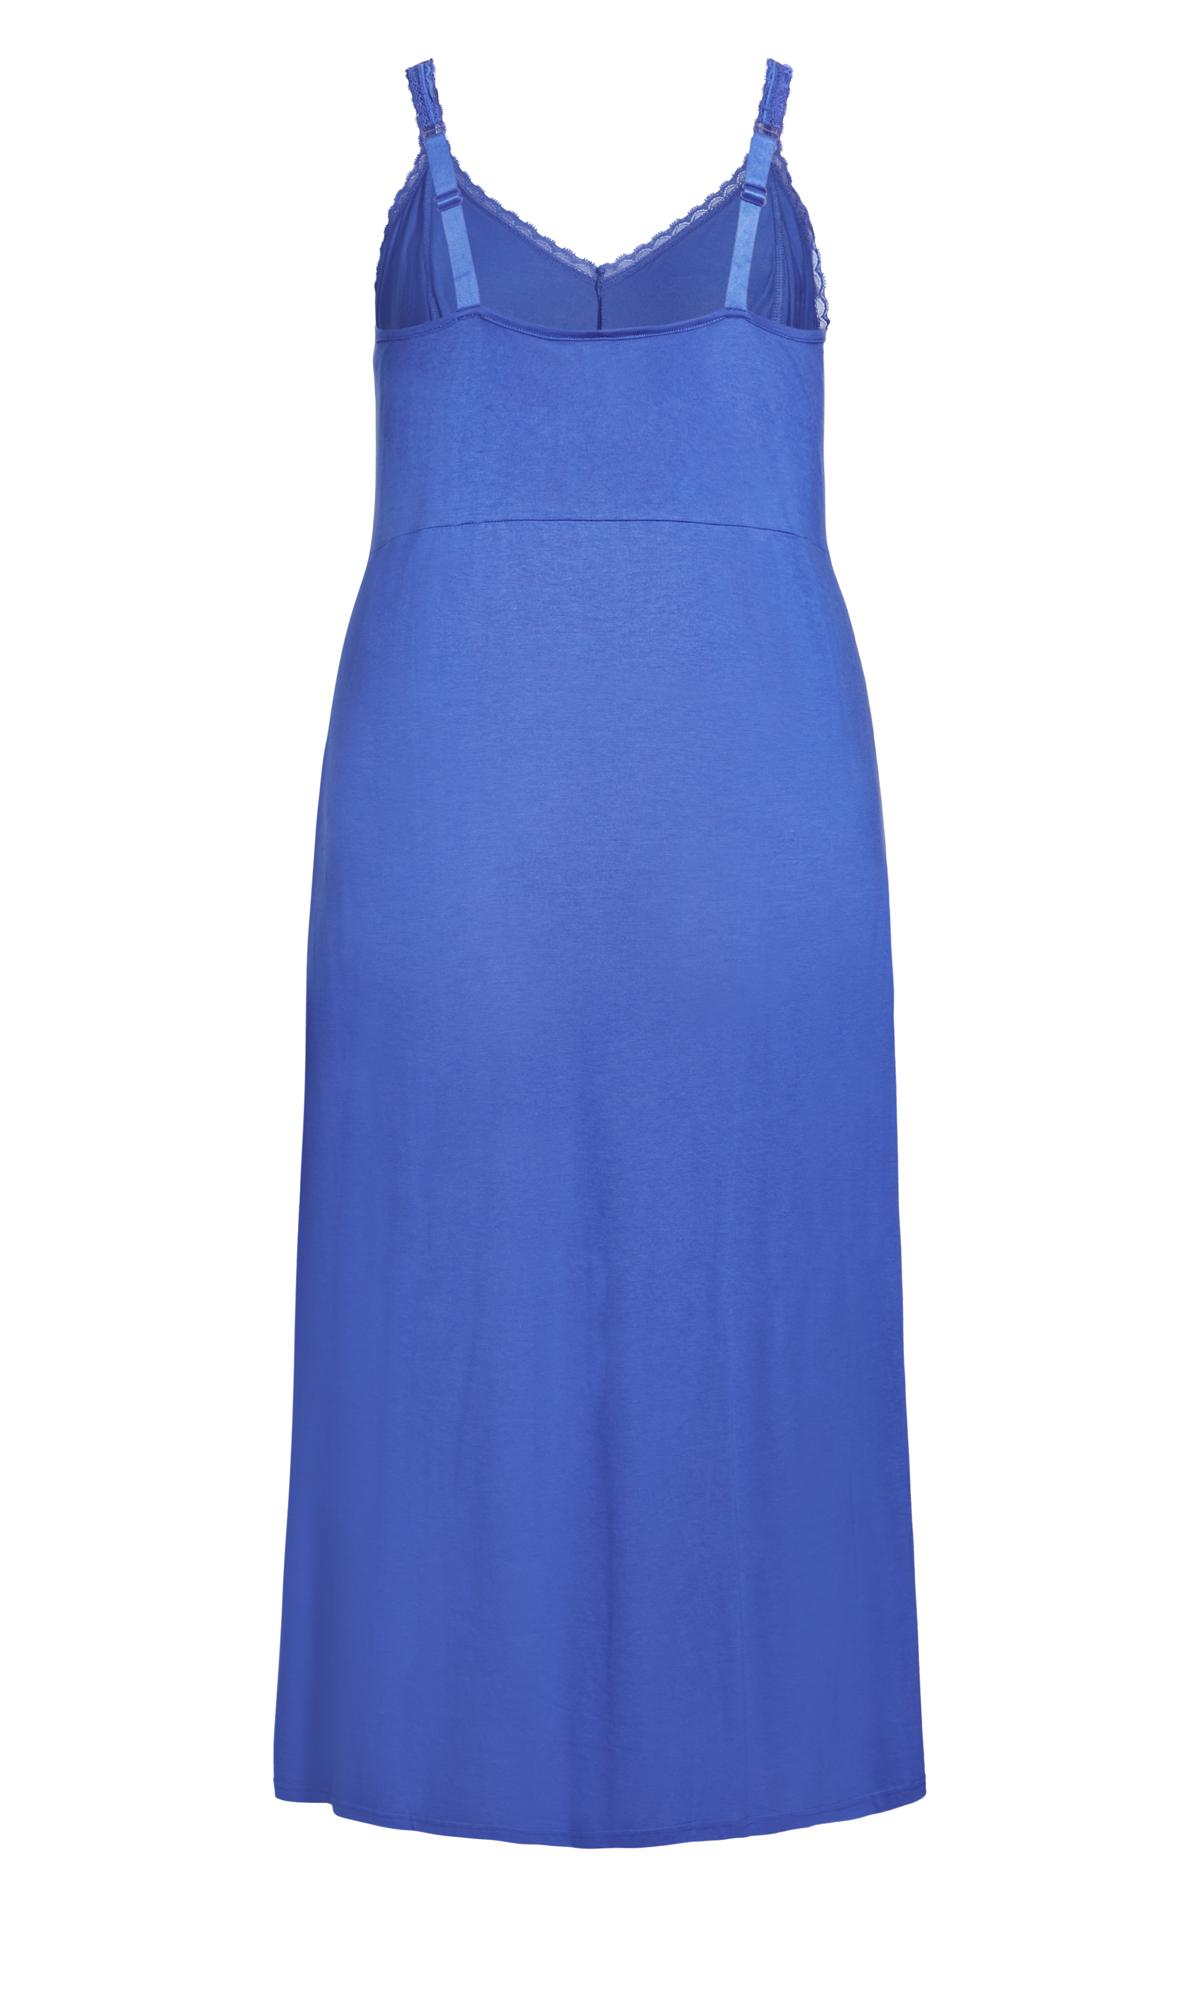 Lace Trim Blue Maxi Sleep Dress 3